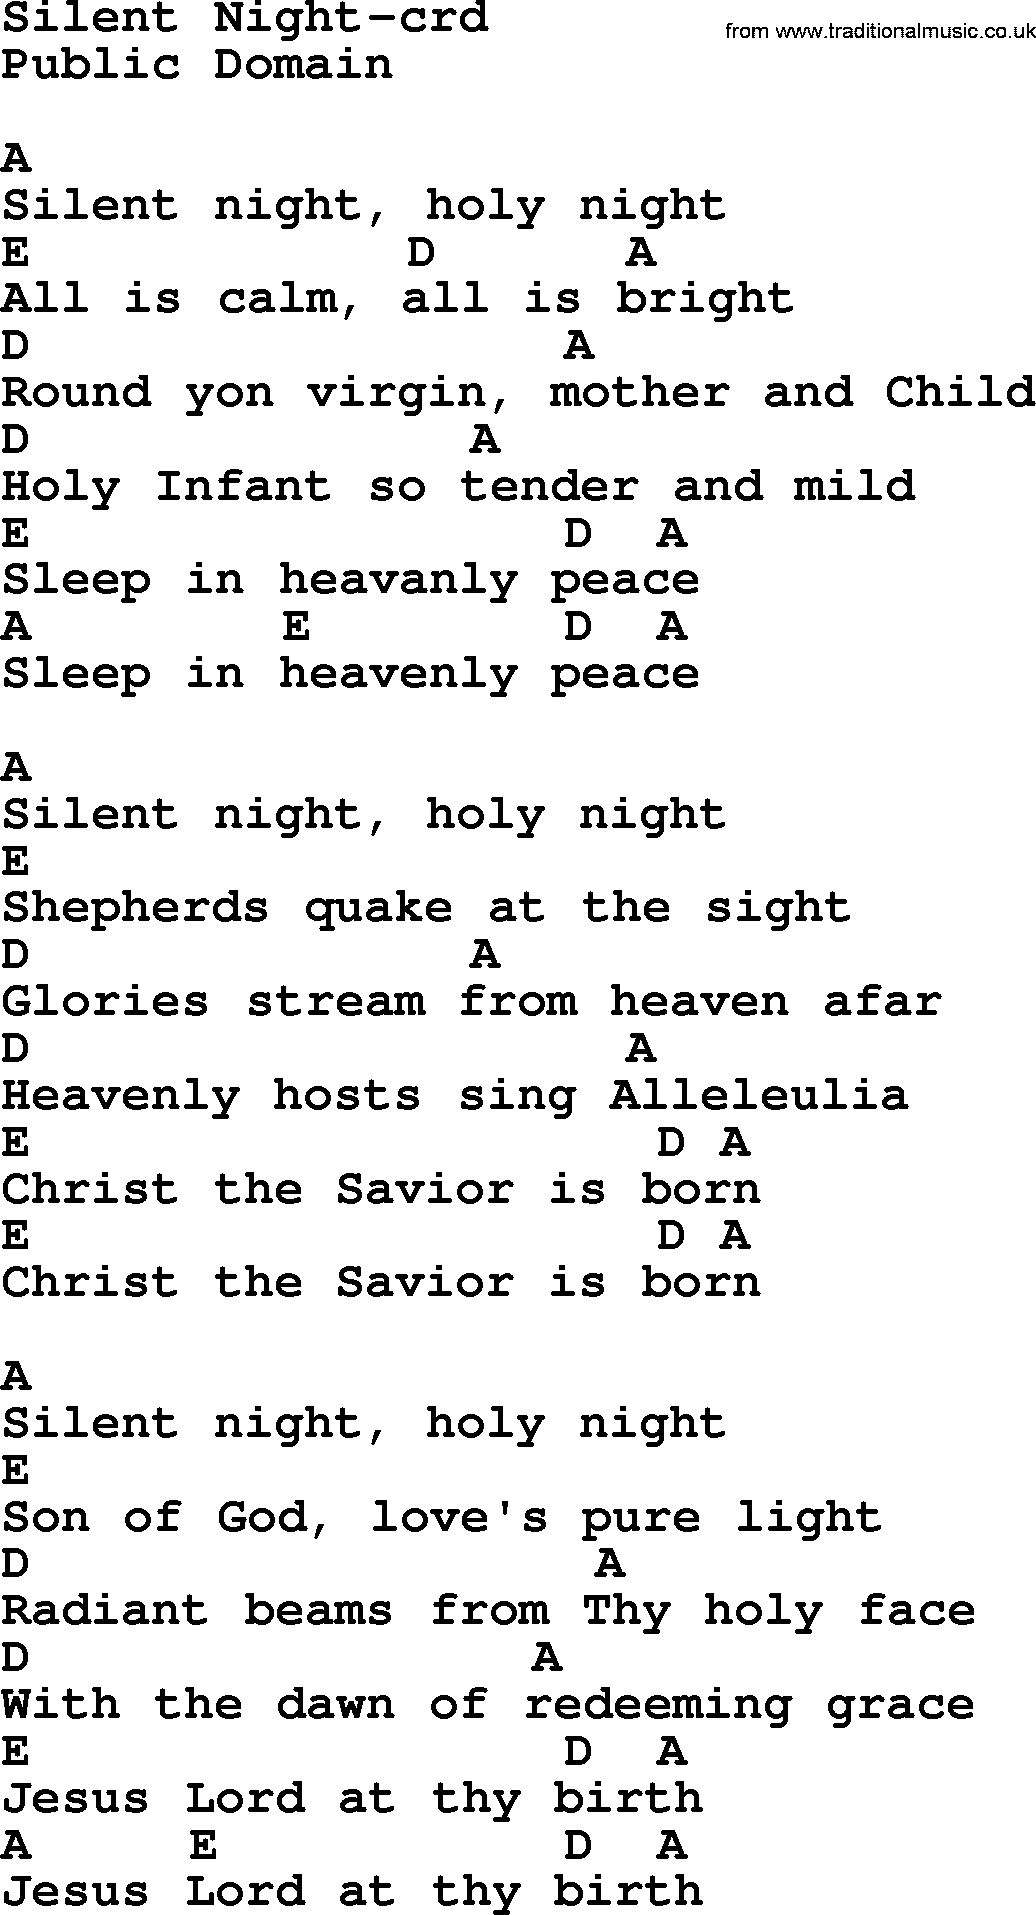 Top 500 Hymn: Silent Night, lyrics and chords